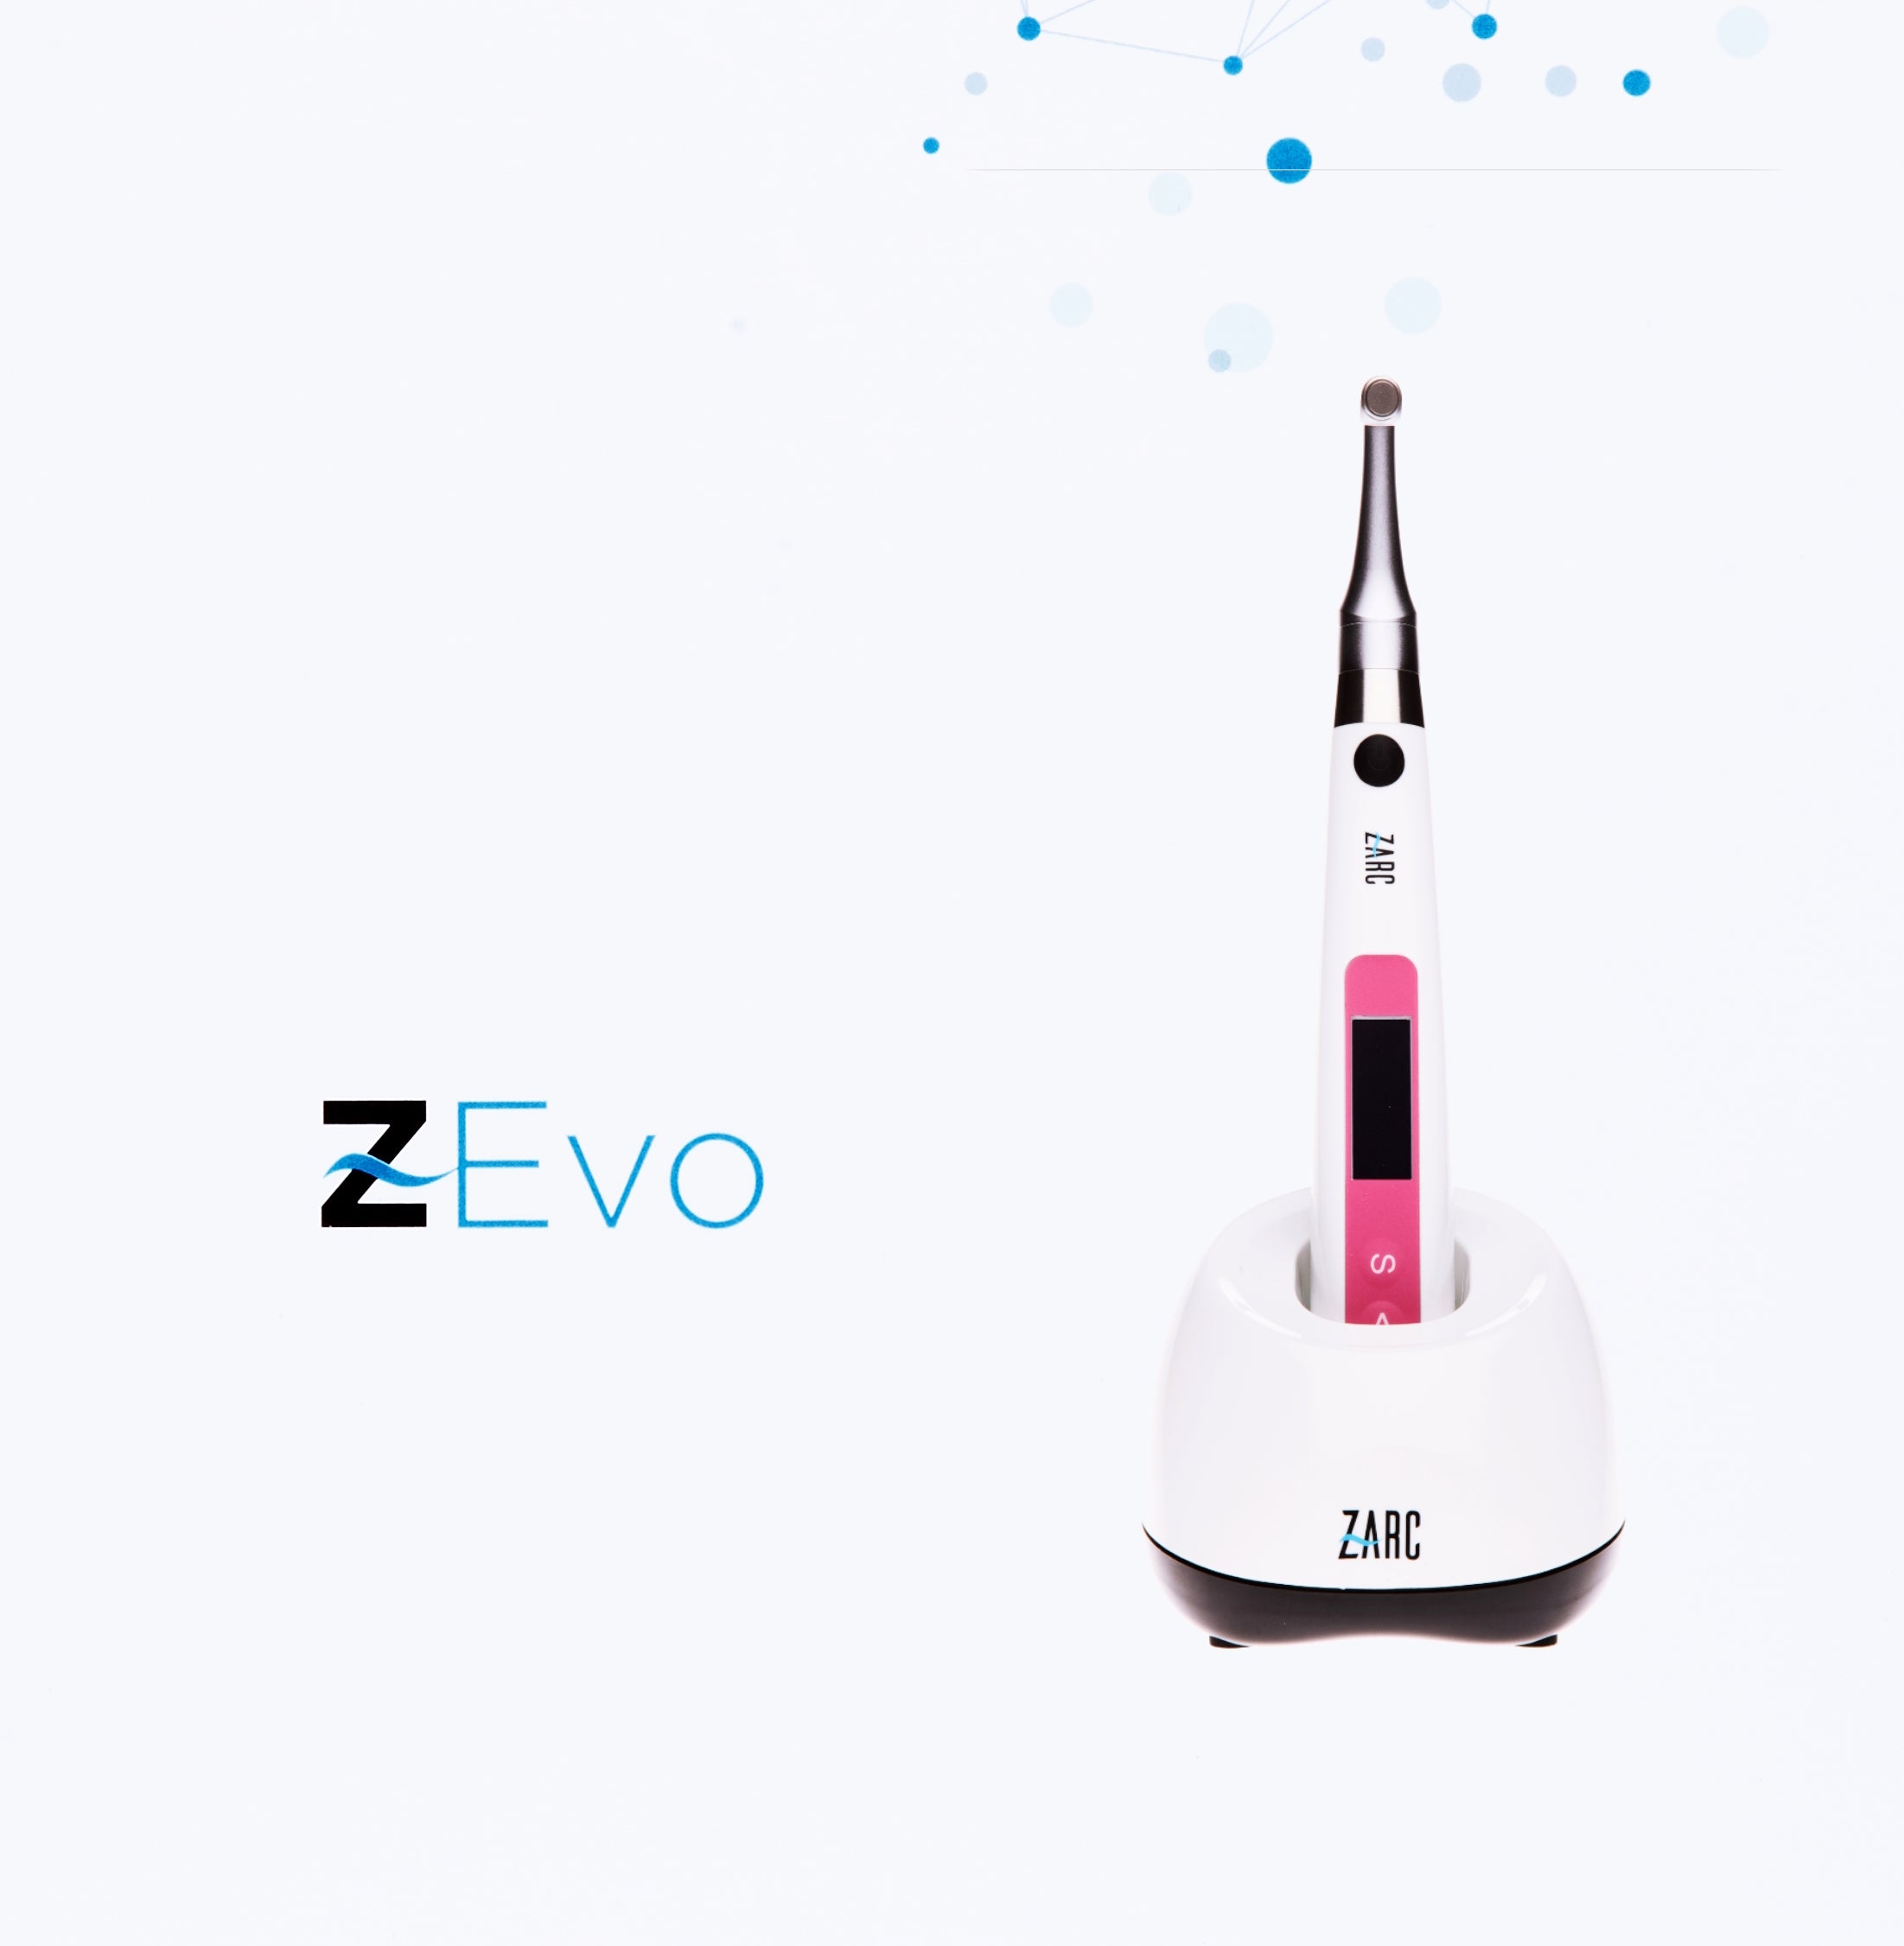 Z-Evo (Endo Motor mit Apexlocator)